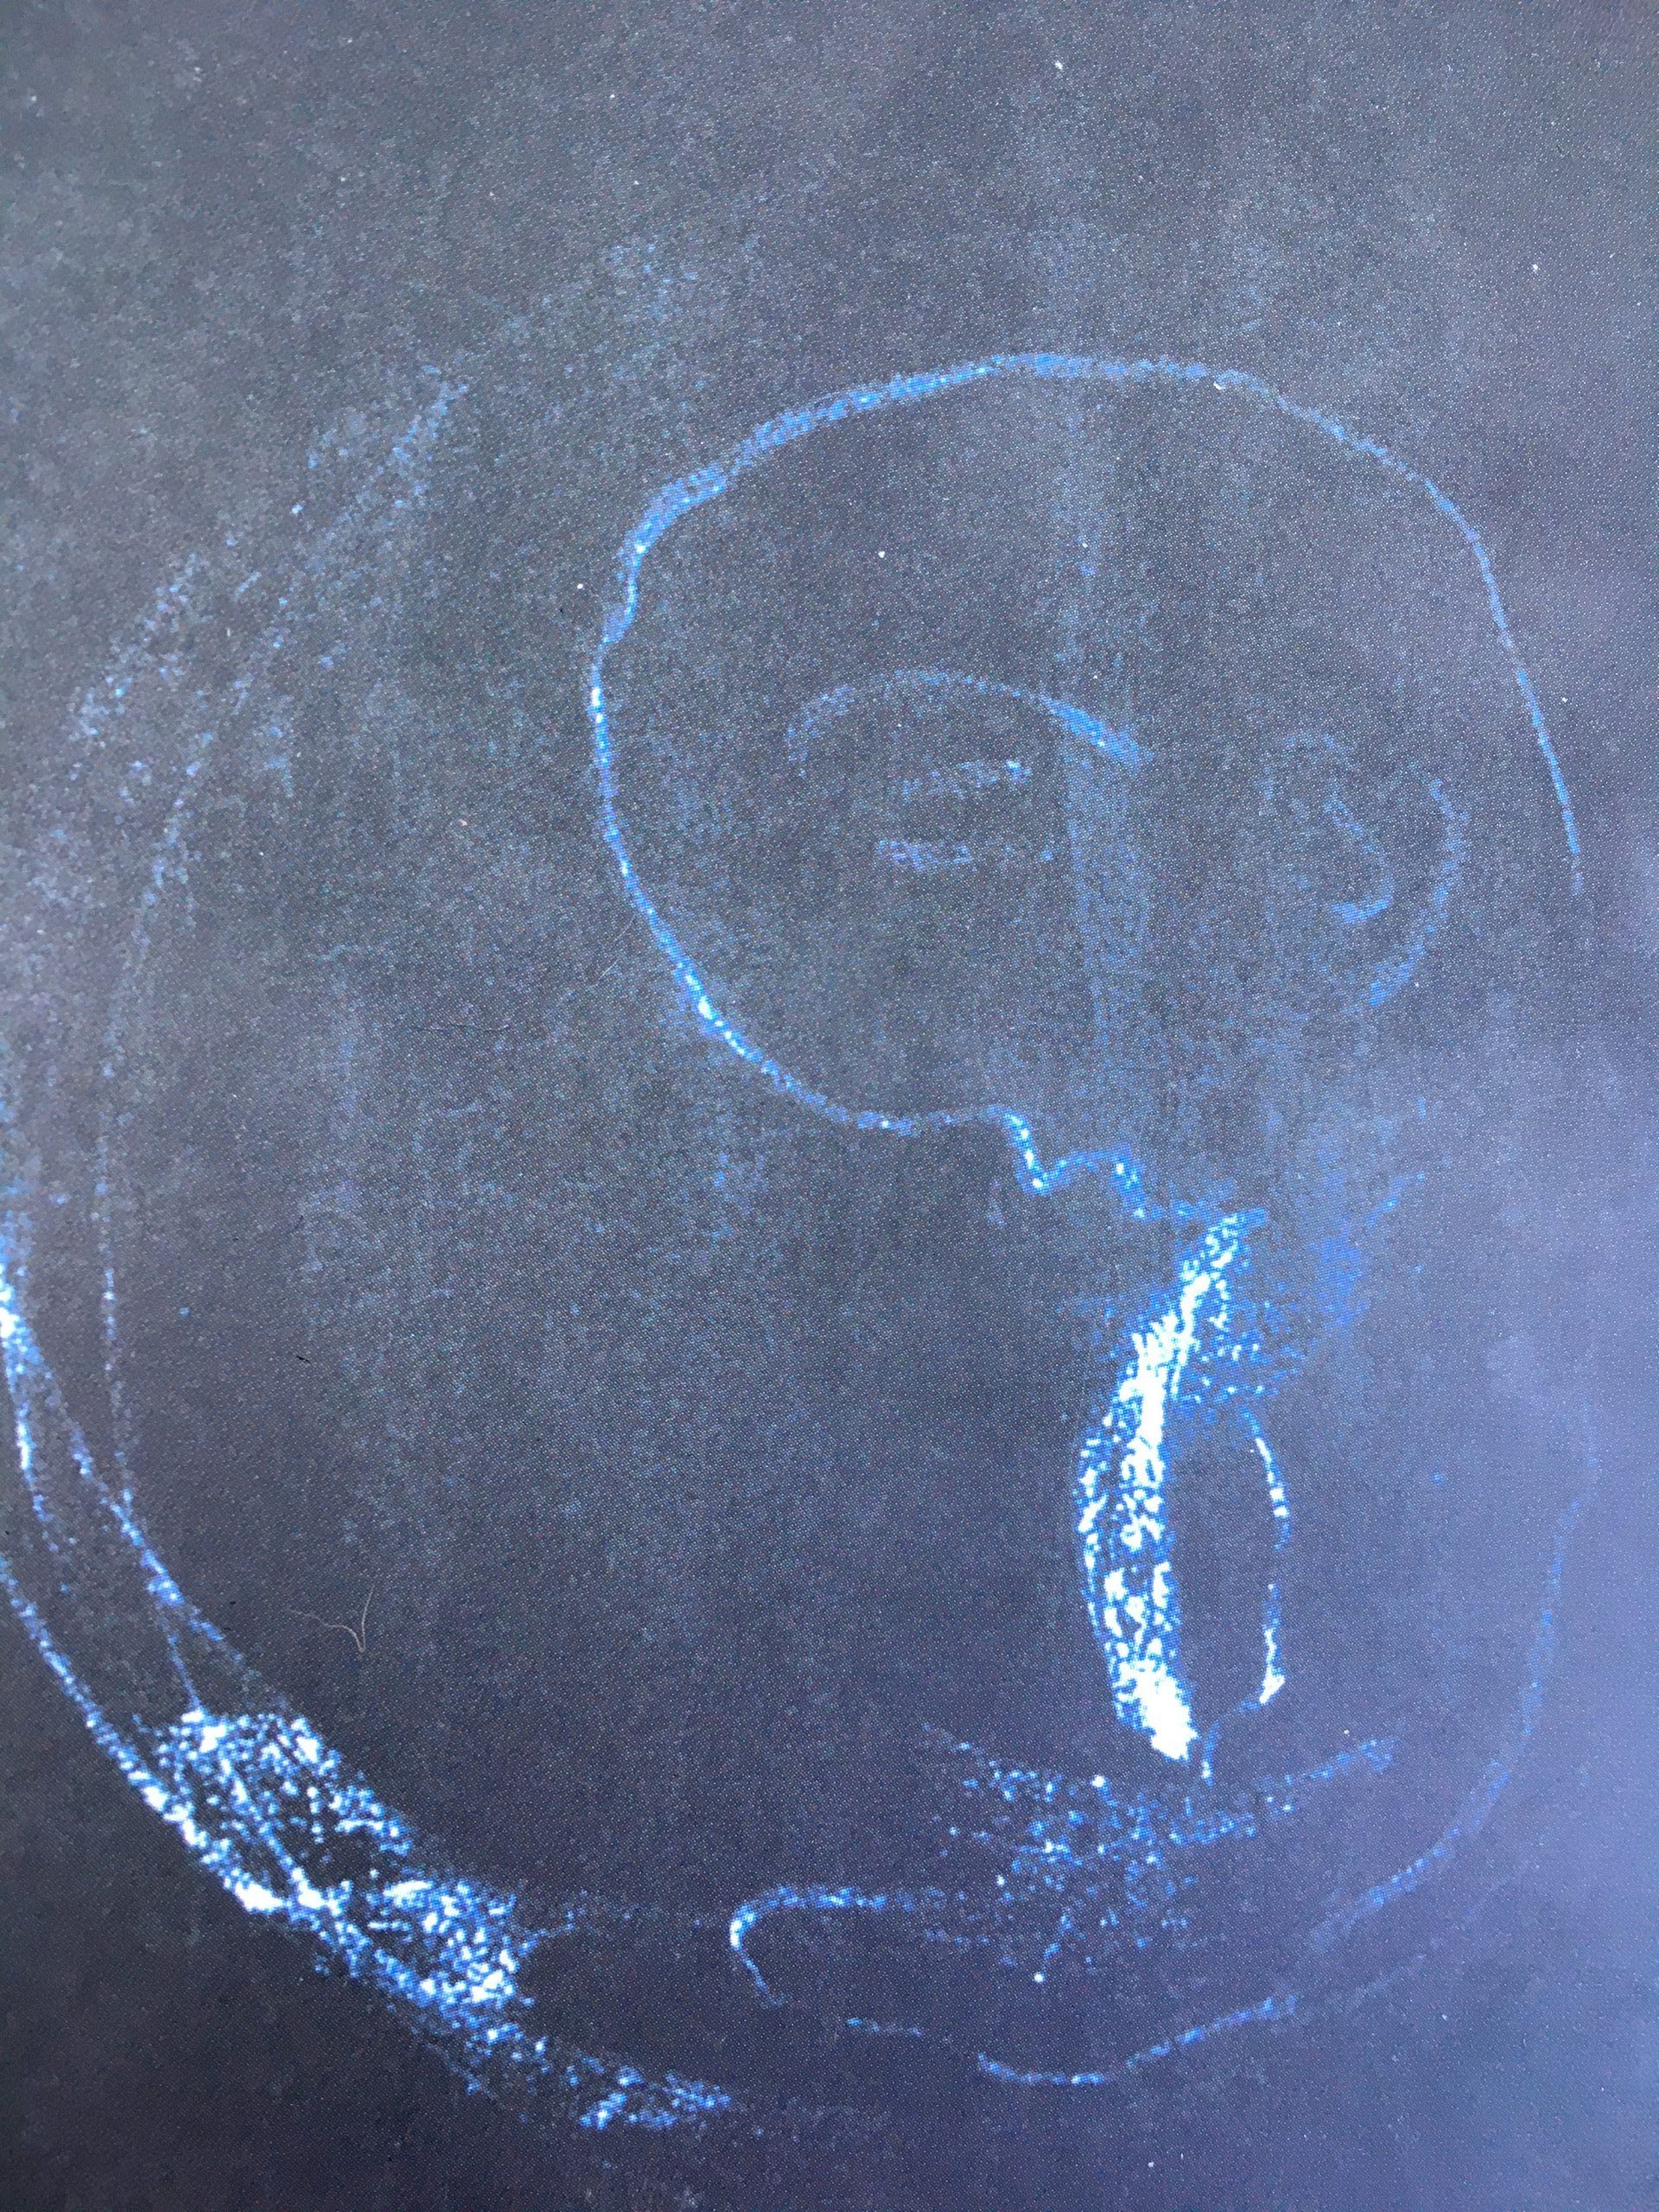 chalk drawing of baby in utero by Rudolf Steiner